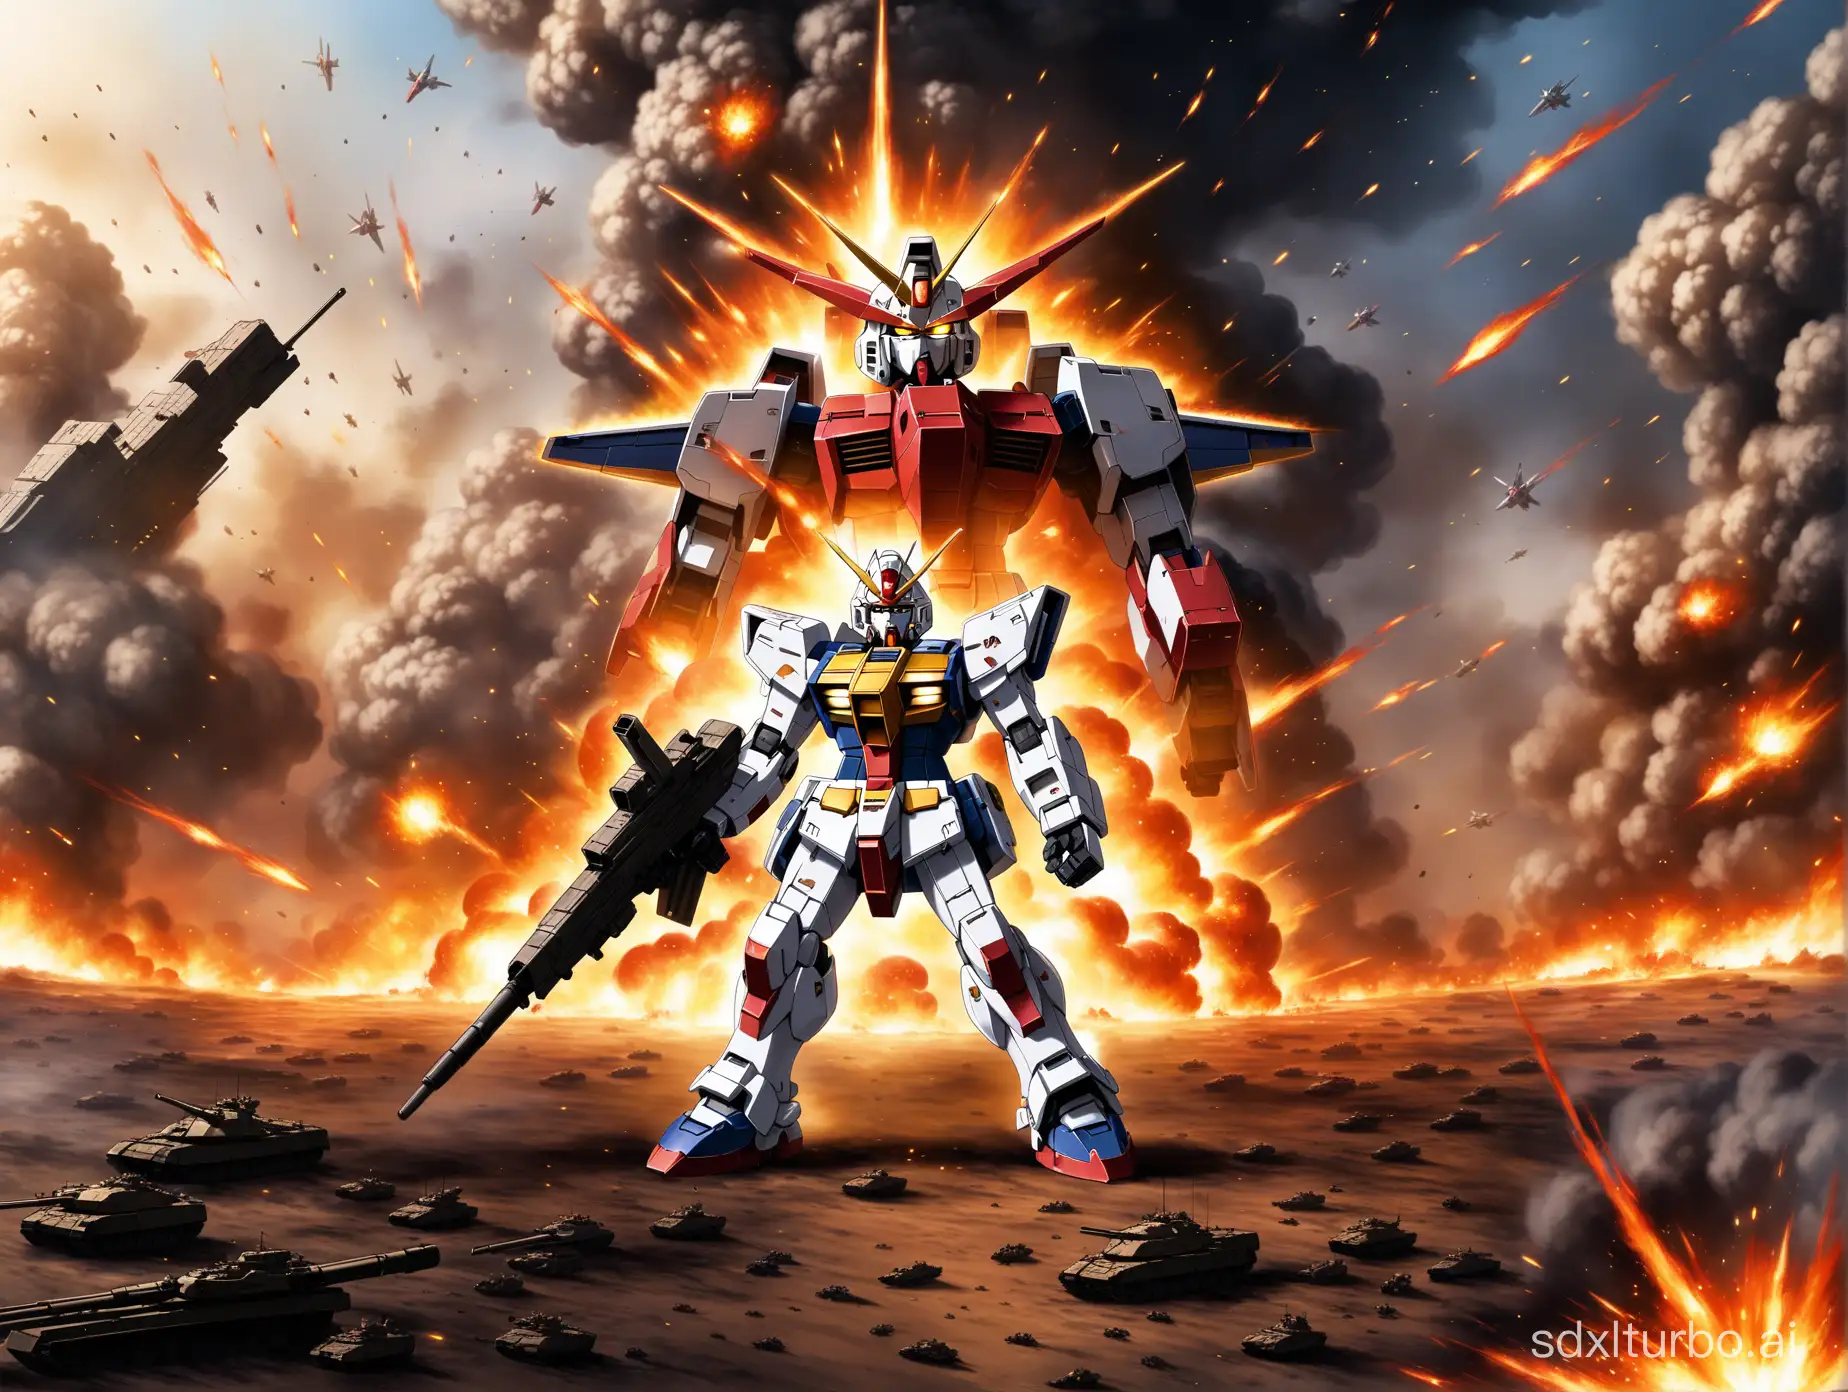 WarTorn-Gundam-with-Severed-Arm-Amid-Explosive-Battlefield